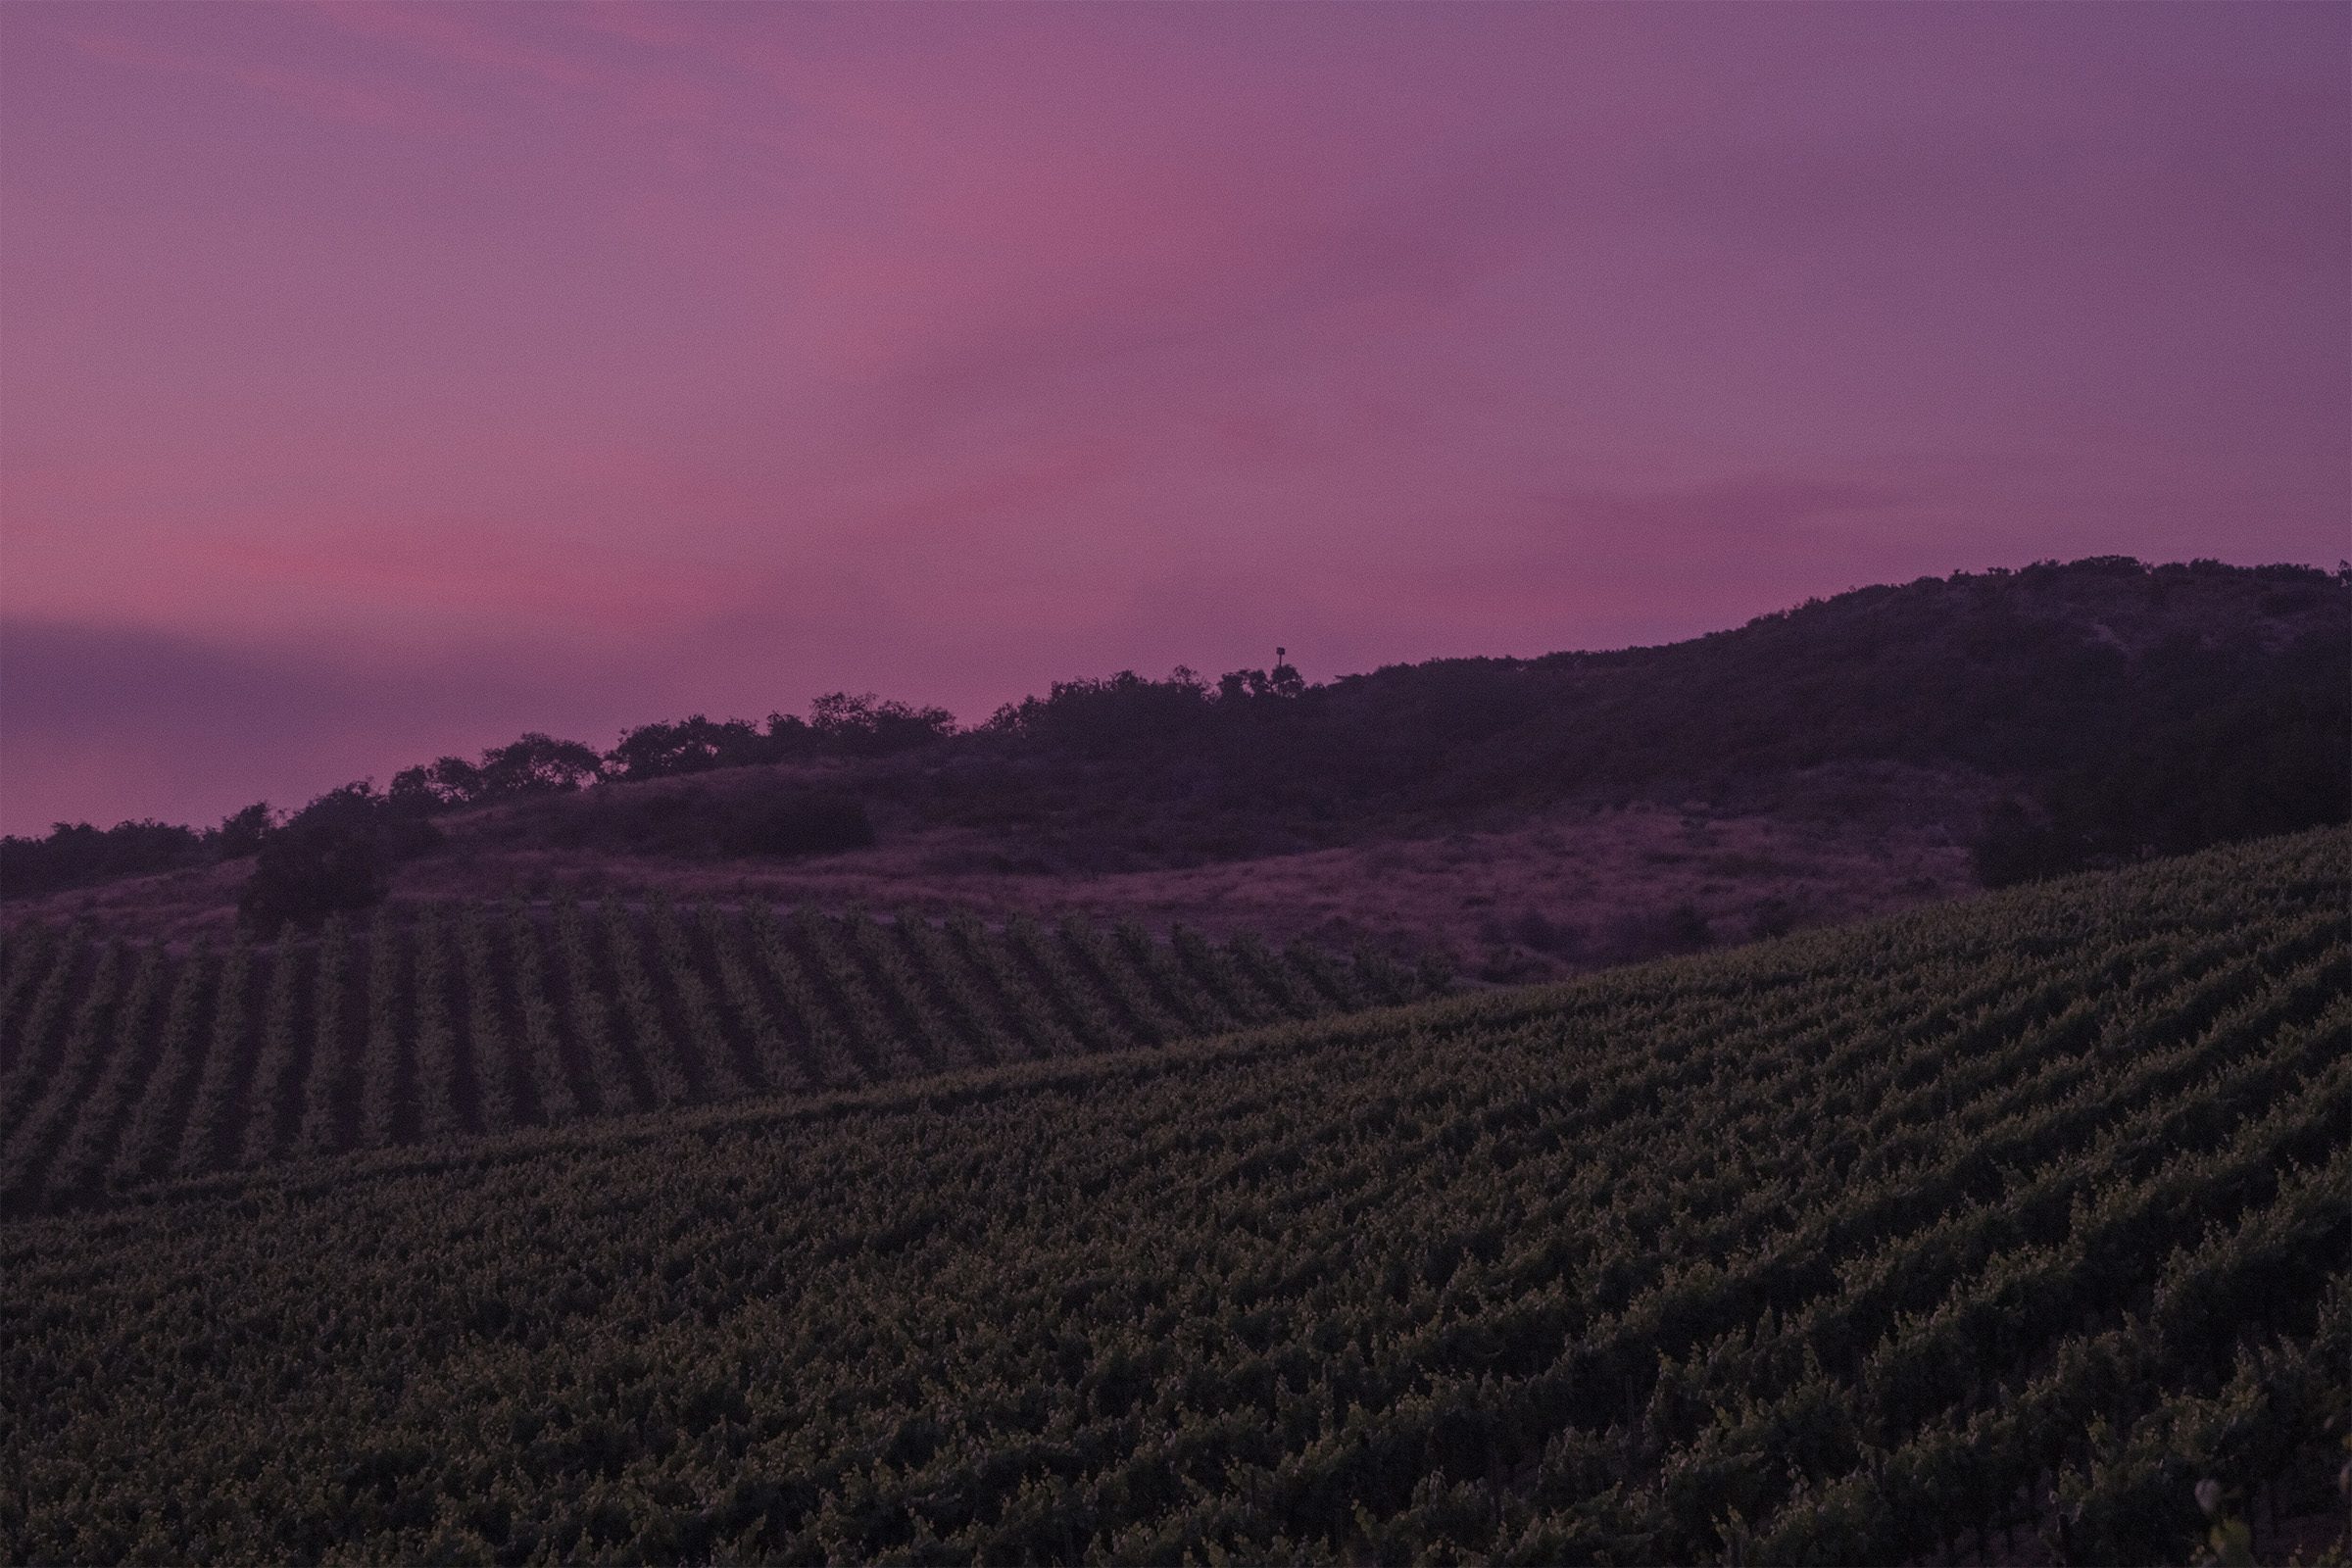 Vineyard under a purple sky